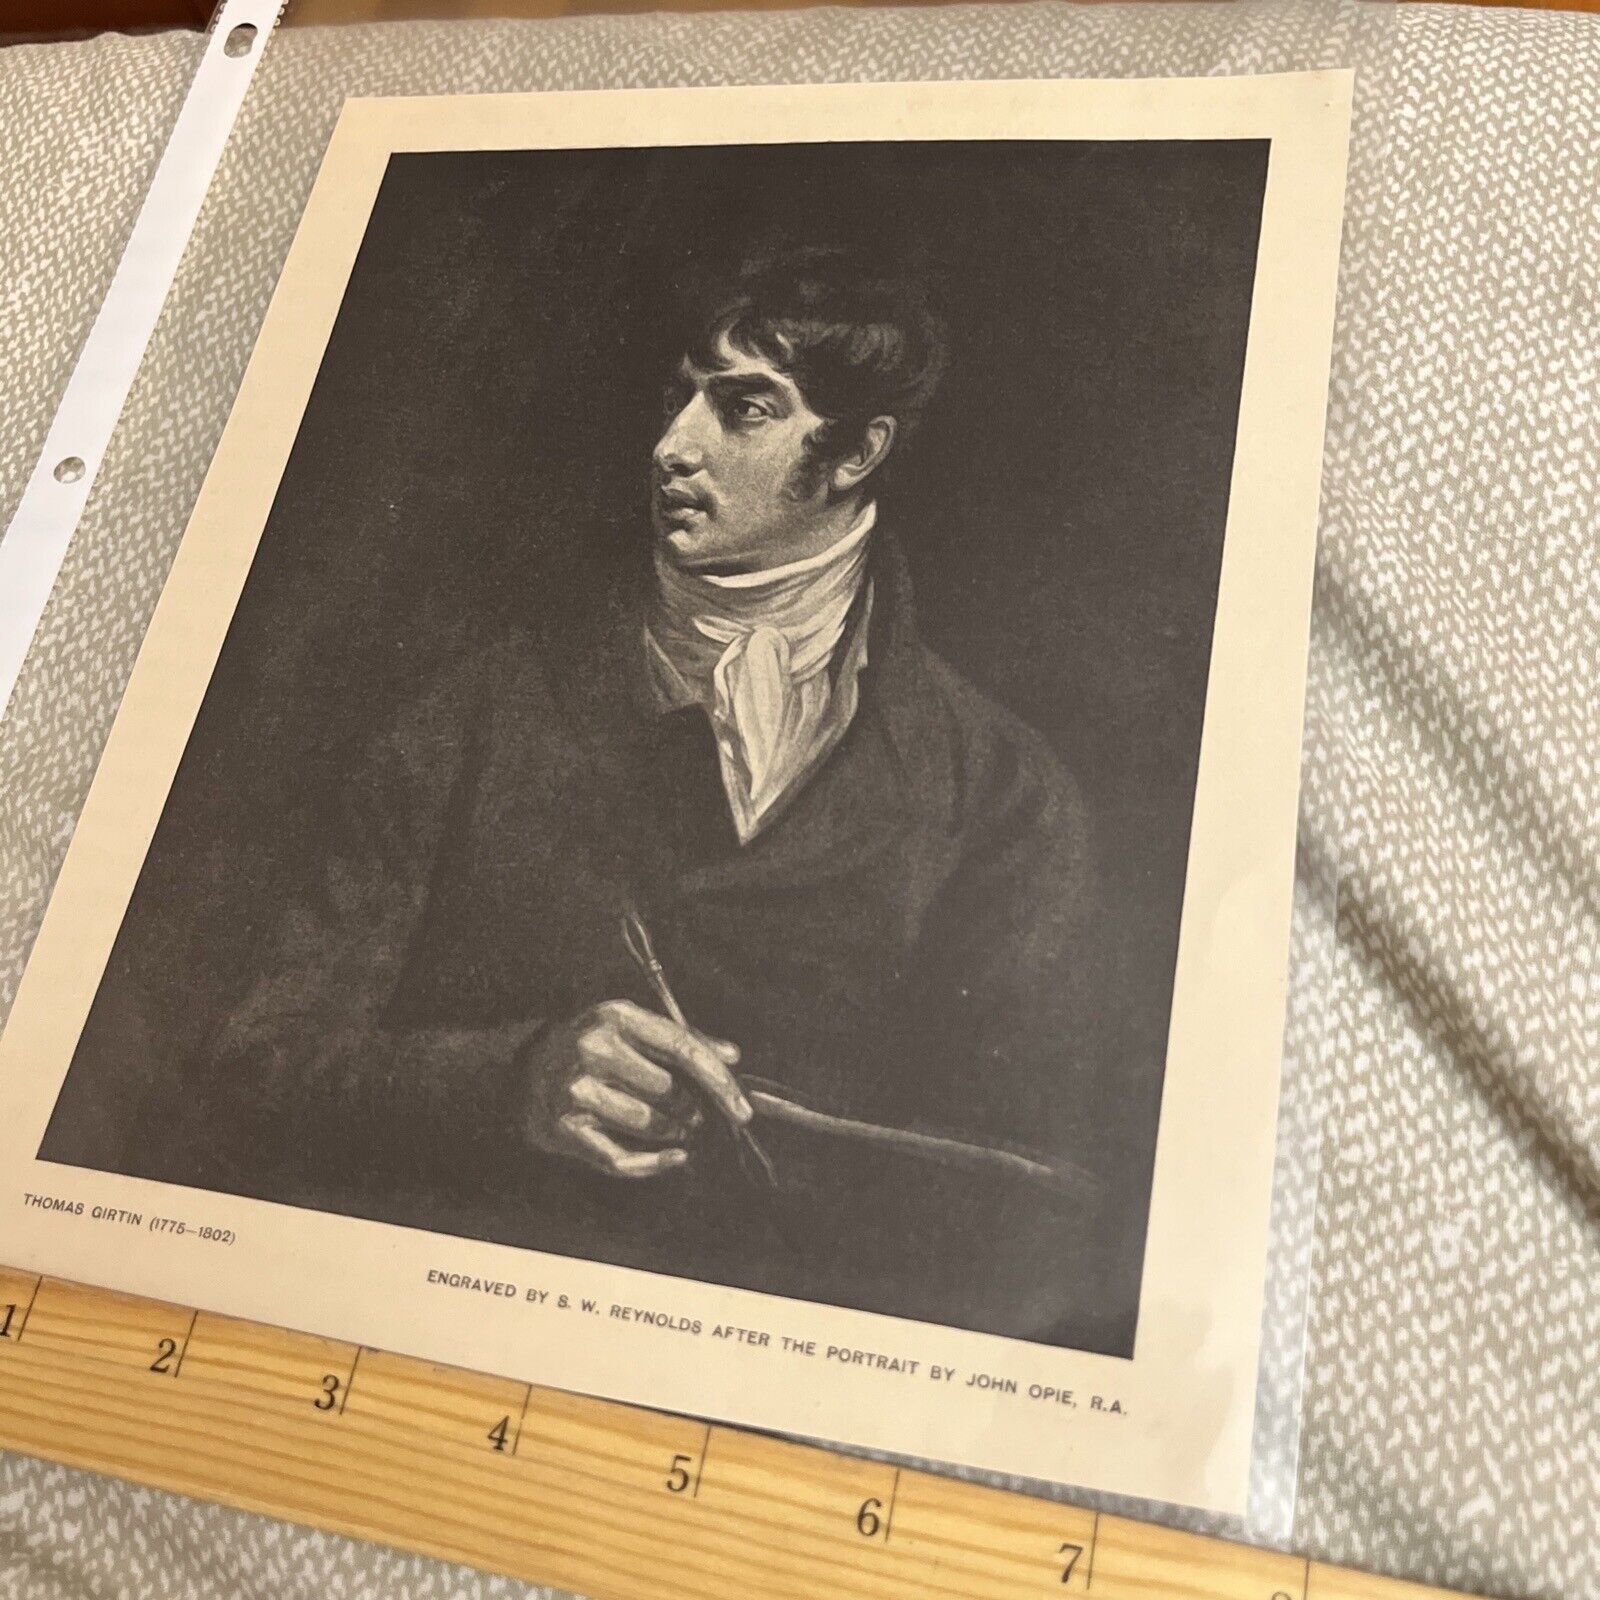 Vintage Print: Portrait of Thomas Girtin - British Watercolor Artist & Etcher